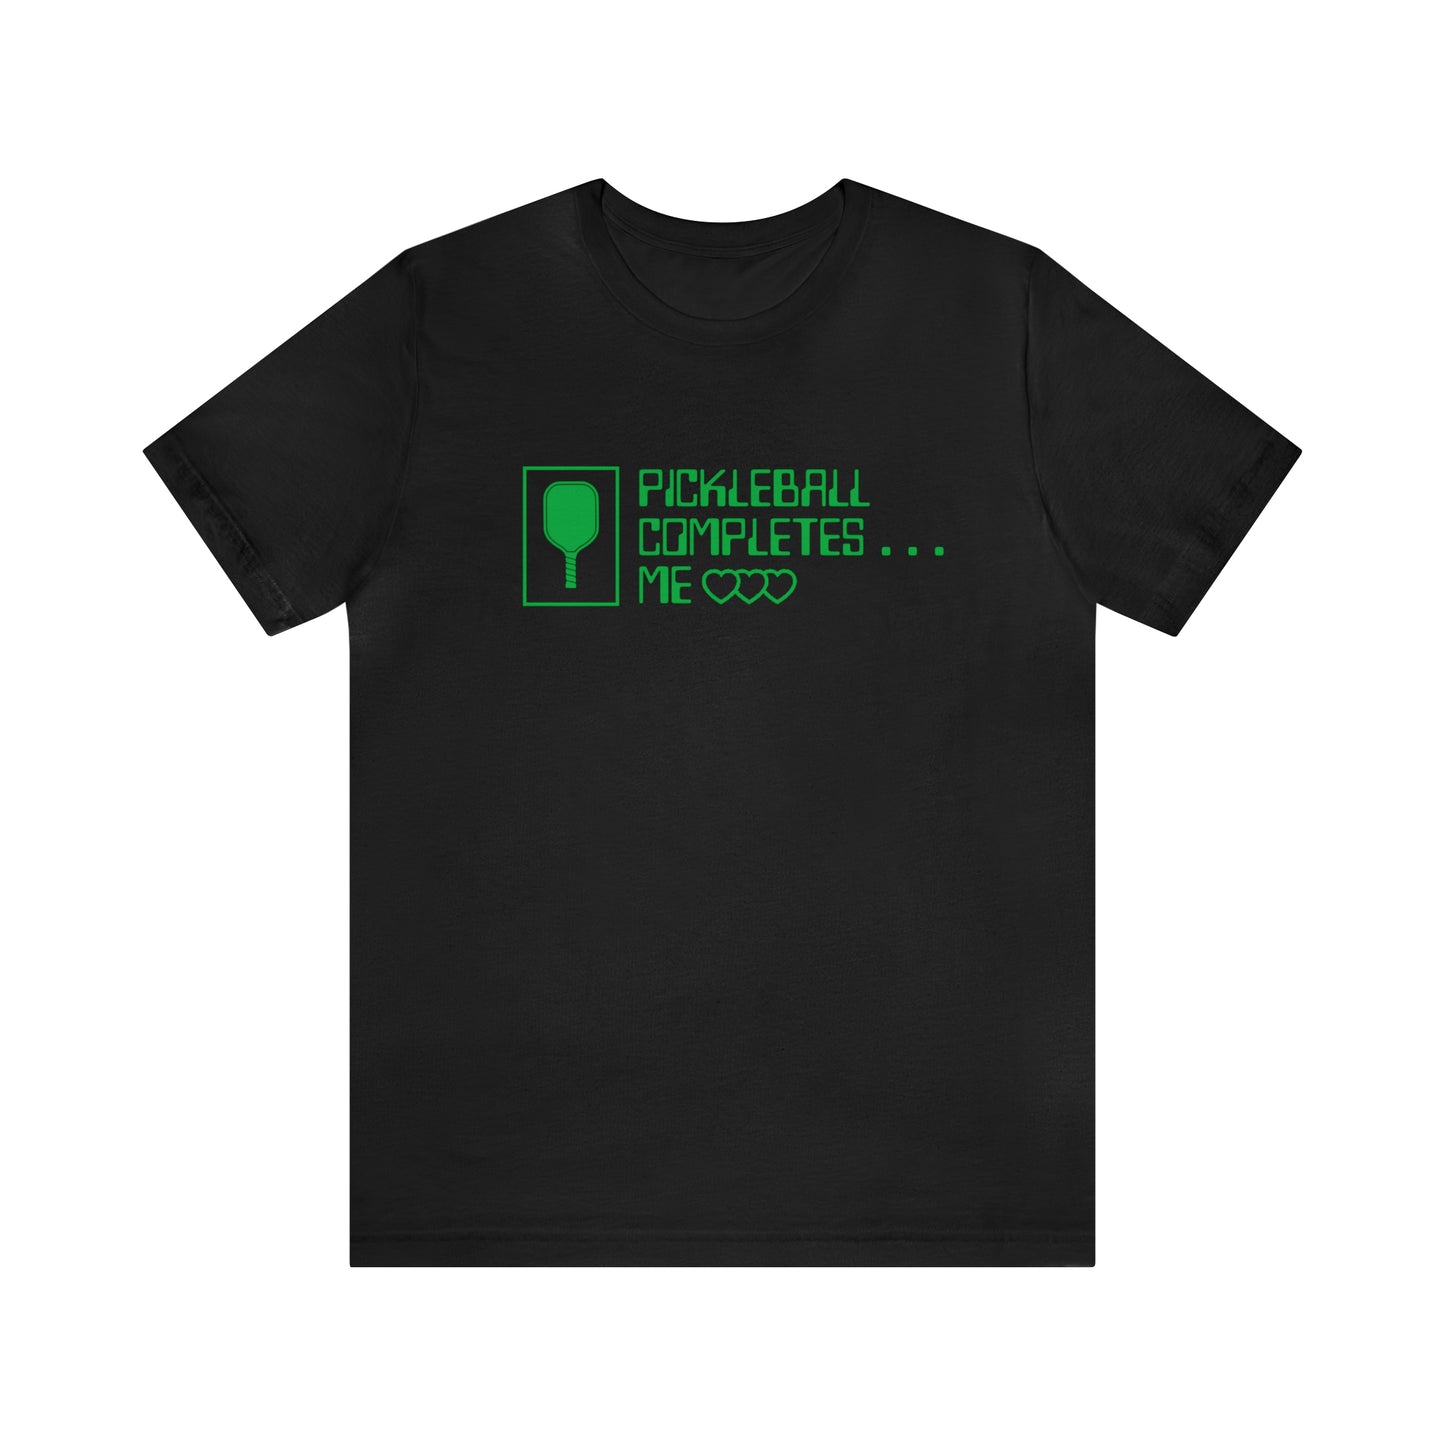 Pickleball Completes Me - Premium T-Shirt